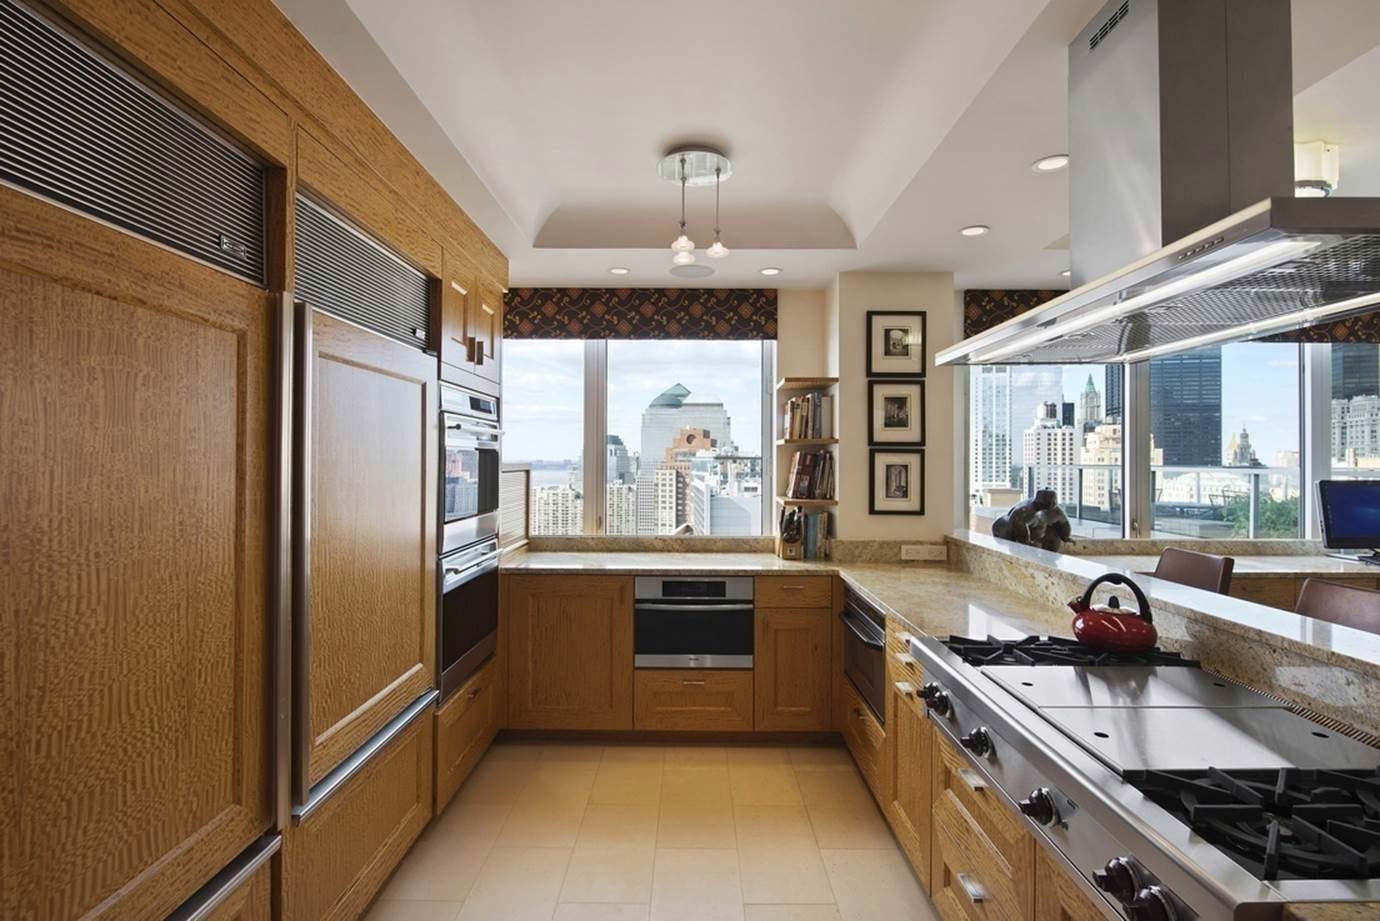 Slim Designer Range Hood in 75-Million-Dollar Duplex NYC Penthouse